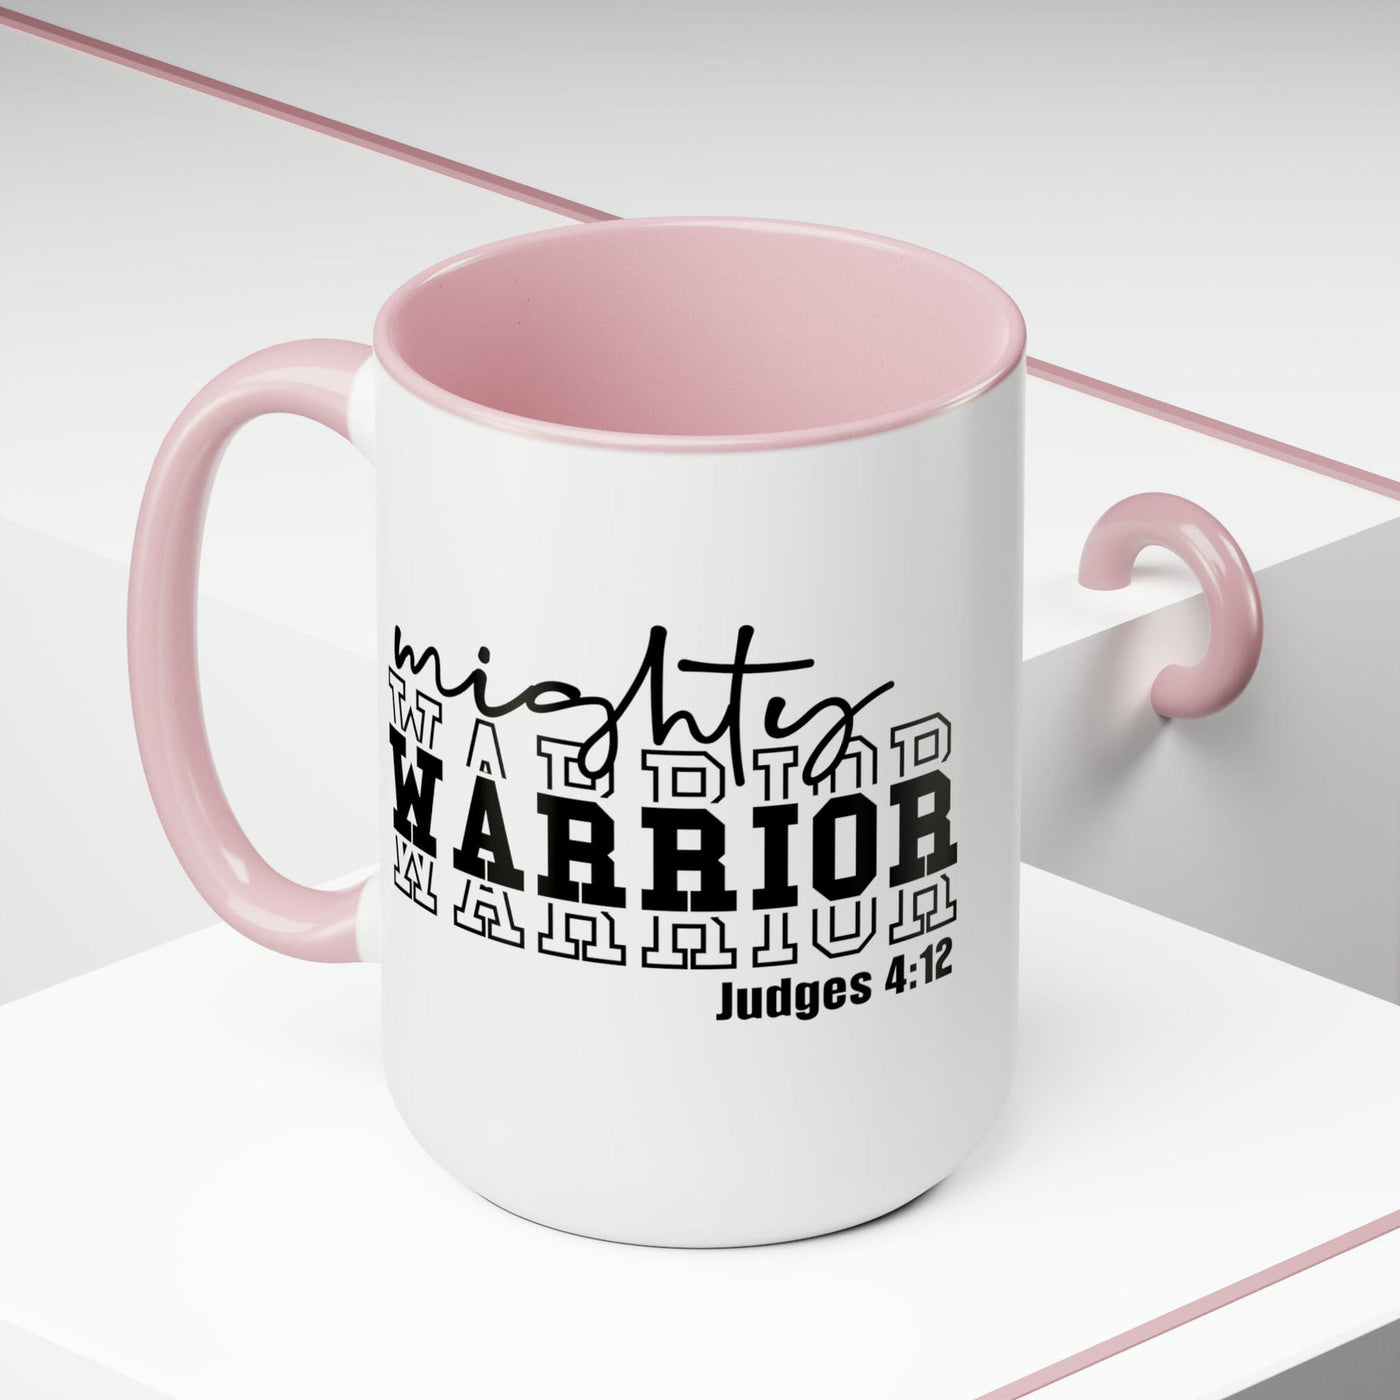 Accent Ceramic Coffee Mug 15oz - Mighty Warrior Black Illustration - Decorative